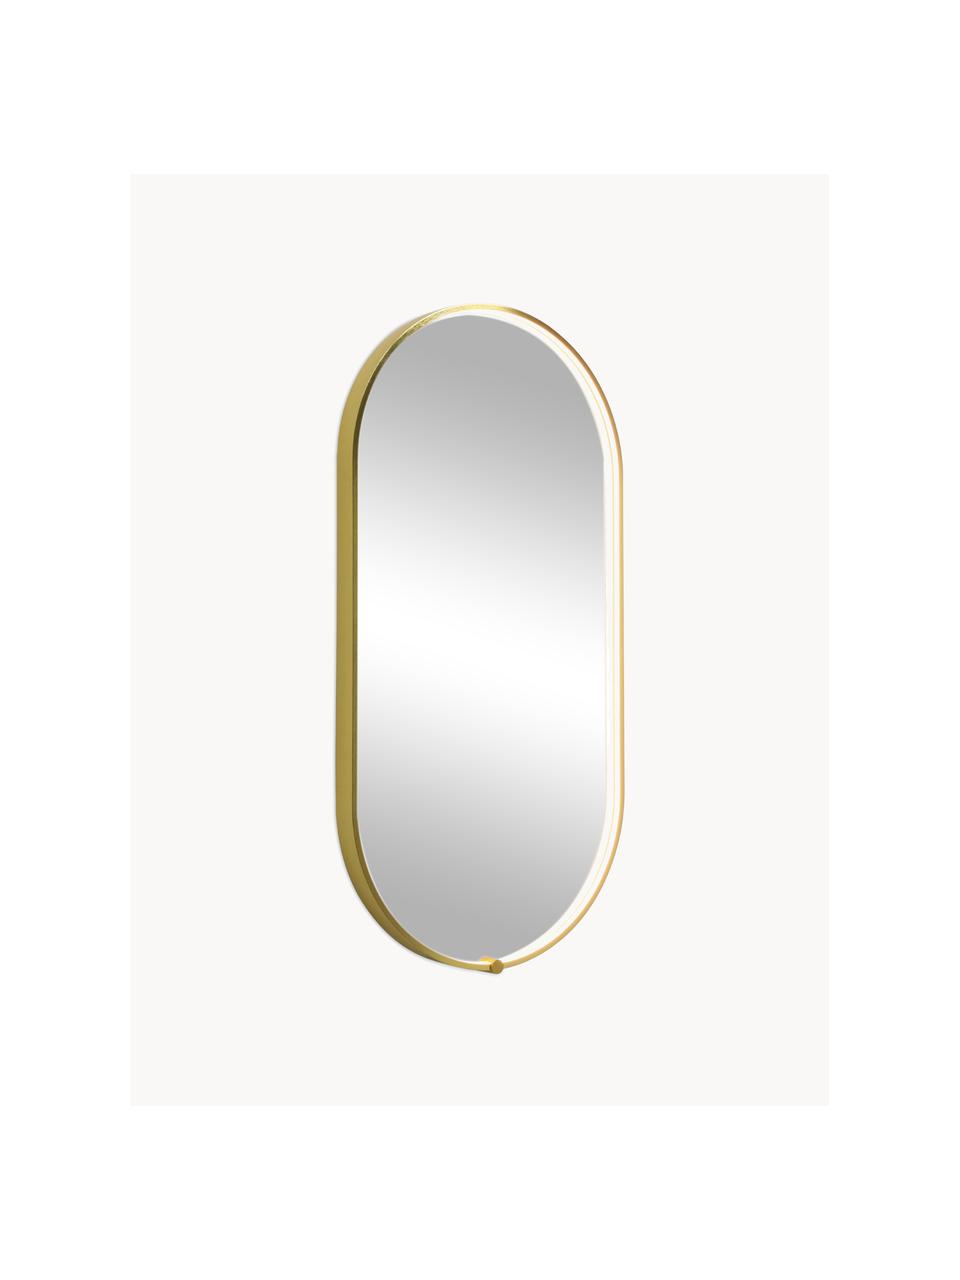 Ovaler Wandspiegel Avior mit LED-Beleuchtung, Rahmen: Aluminium, beschichtet, Spiegelfläche: Spiegelglas, Goldfarben, B 45 x H 90 cm